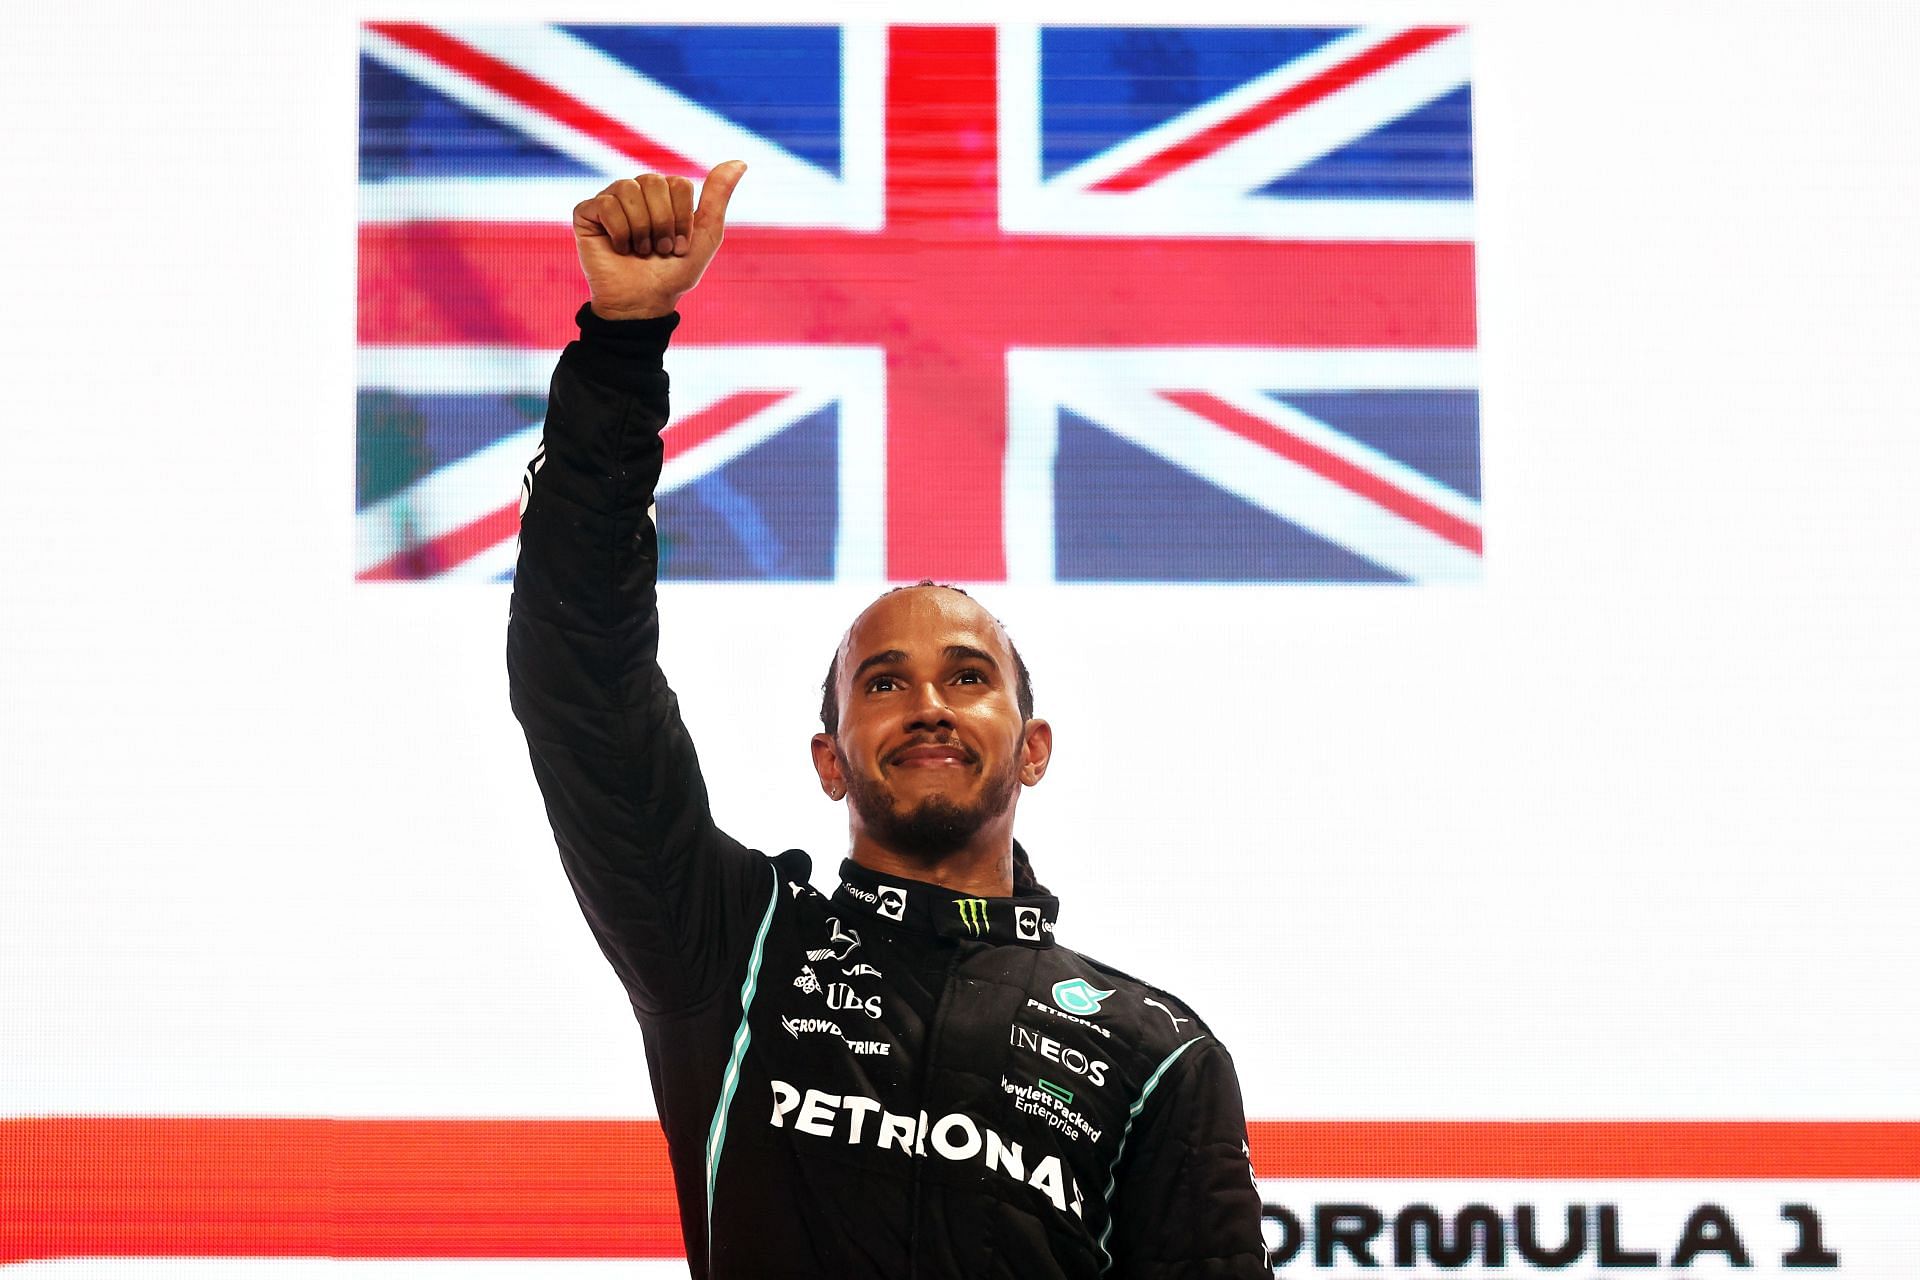 Lewis Hamilton won the inaugural F1 Grand Prix of Qatar